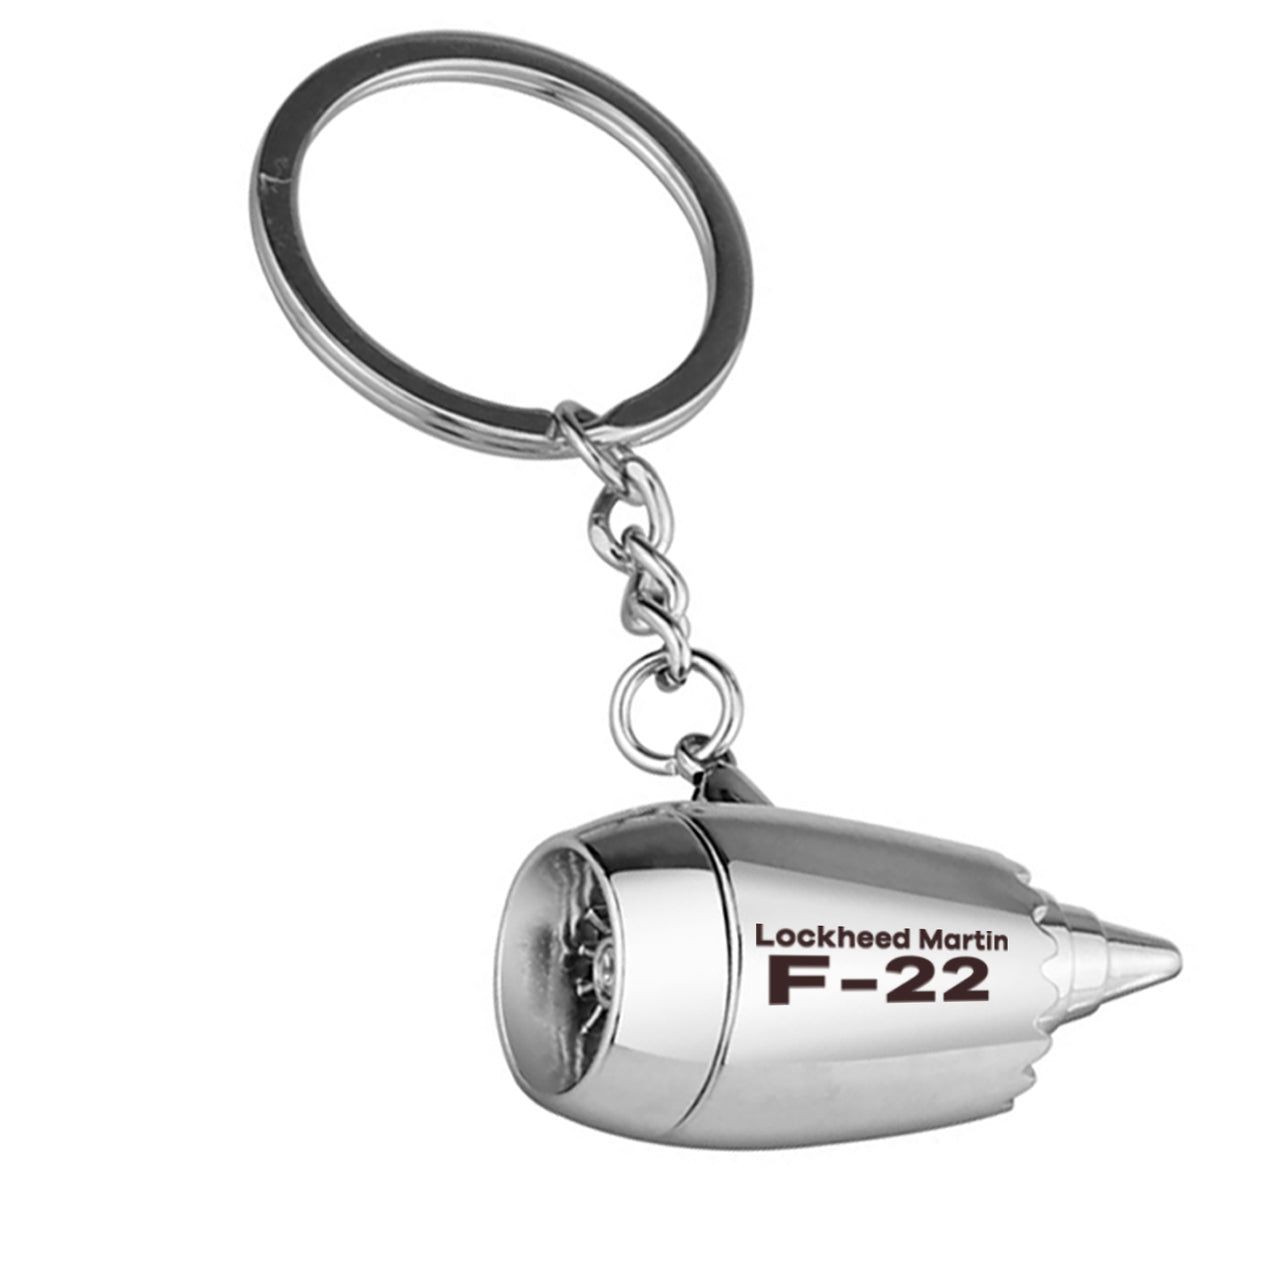 The Lockheed Martin F22 Designed Airplane Jet Engine Shaped Key Chain